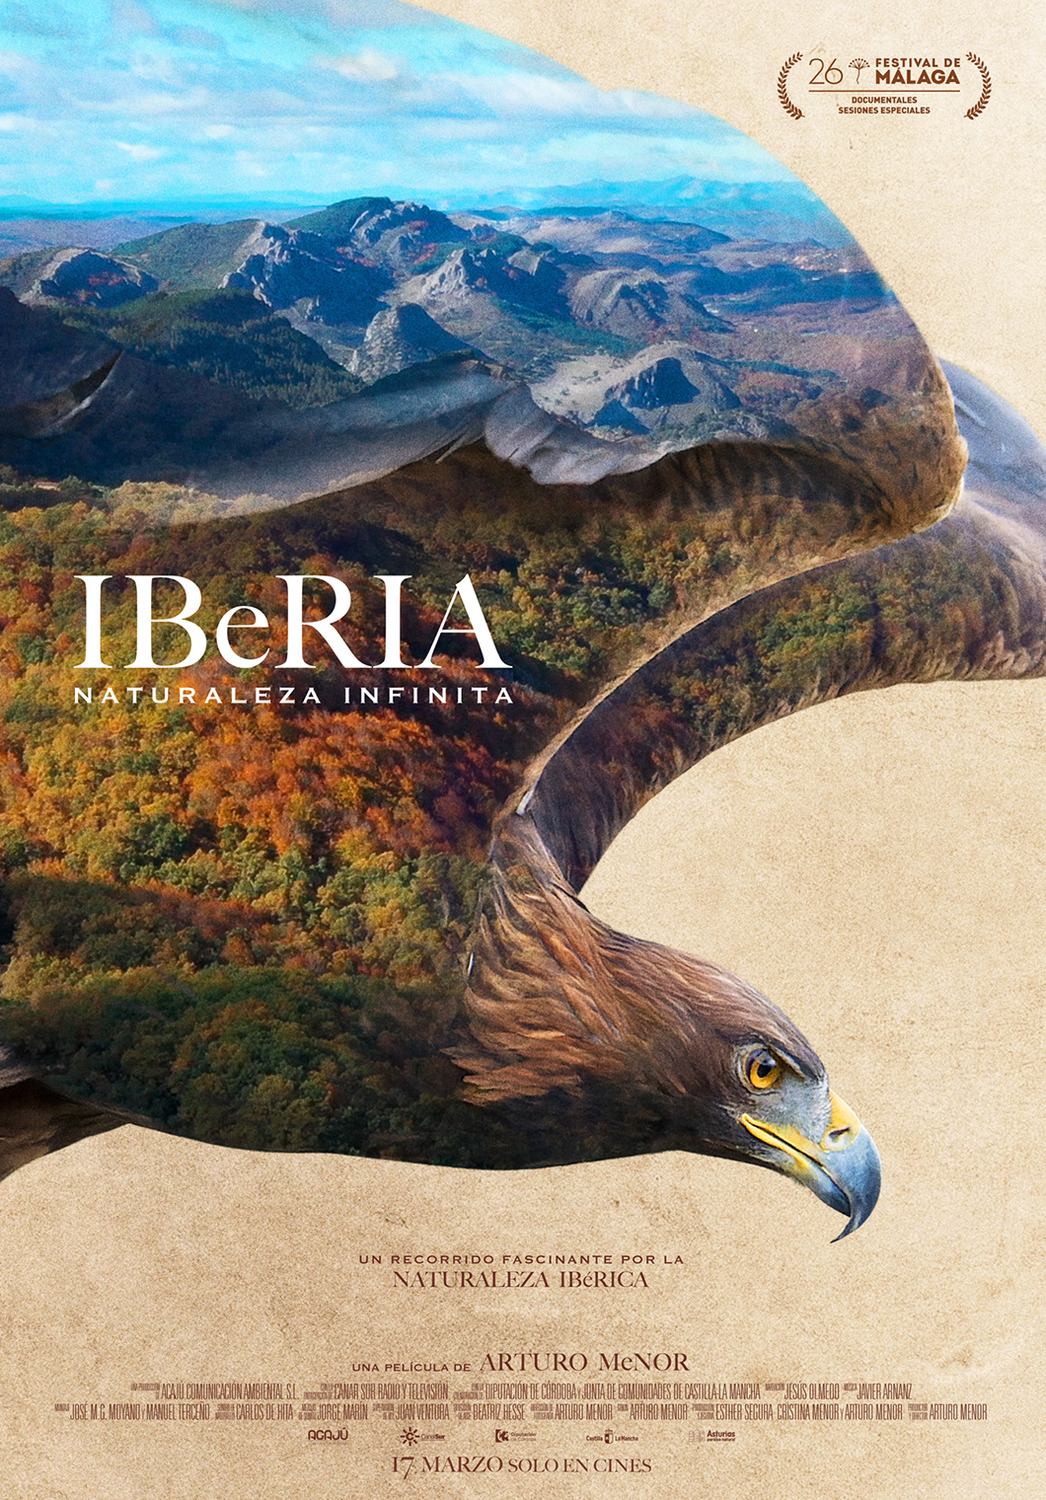 Extra Large Movie Poster Image for Iberia, naturaleza infinita 